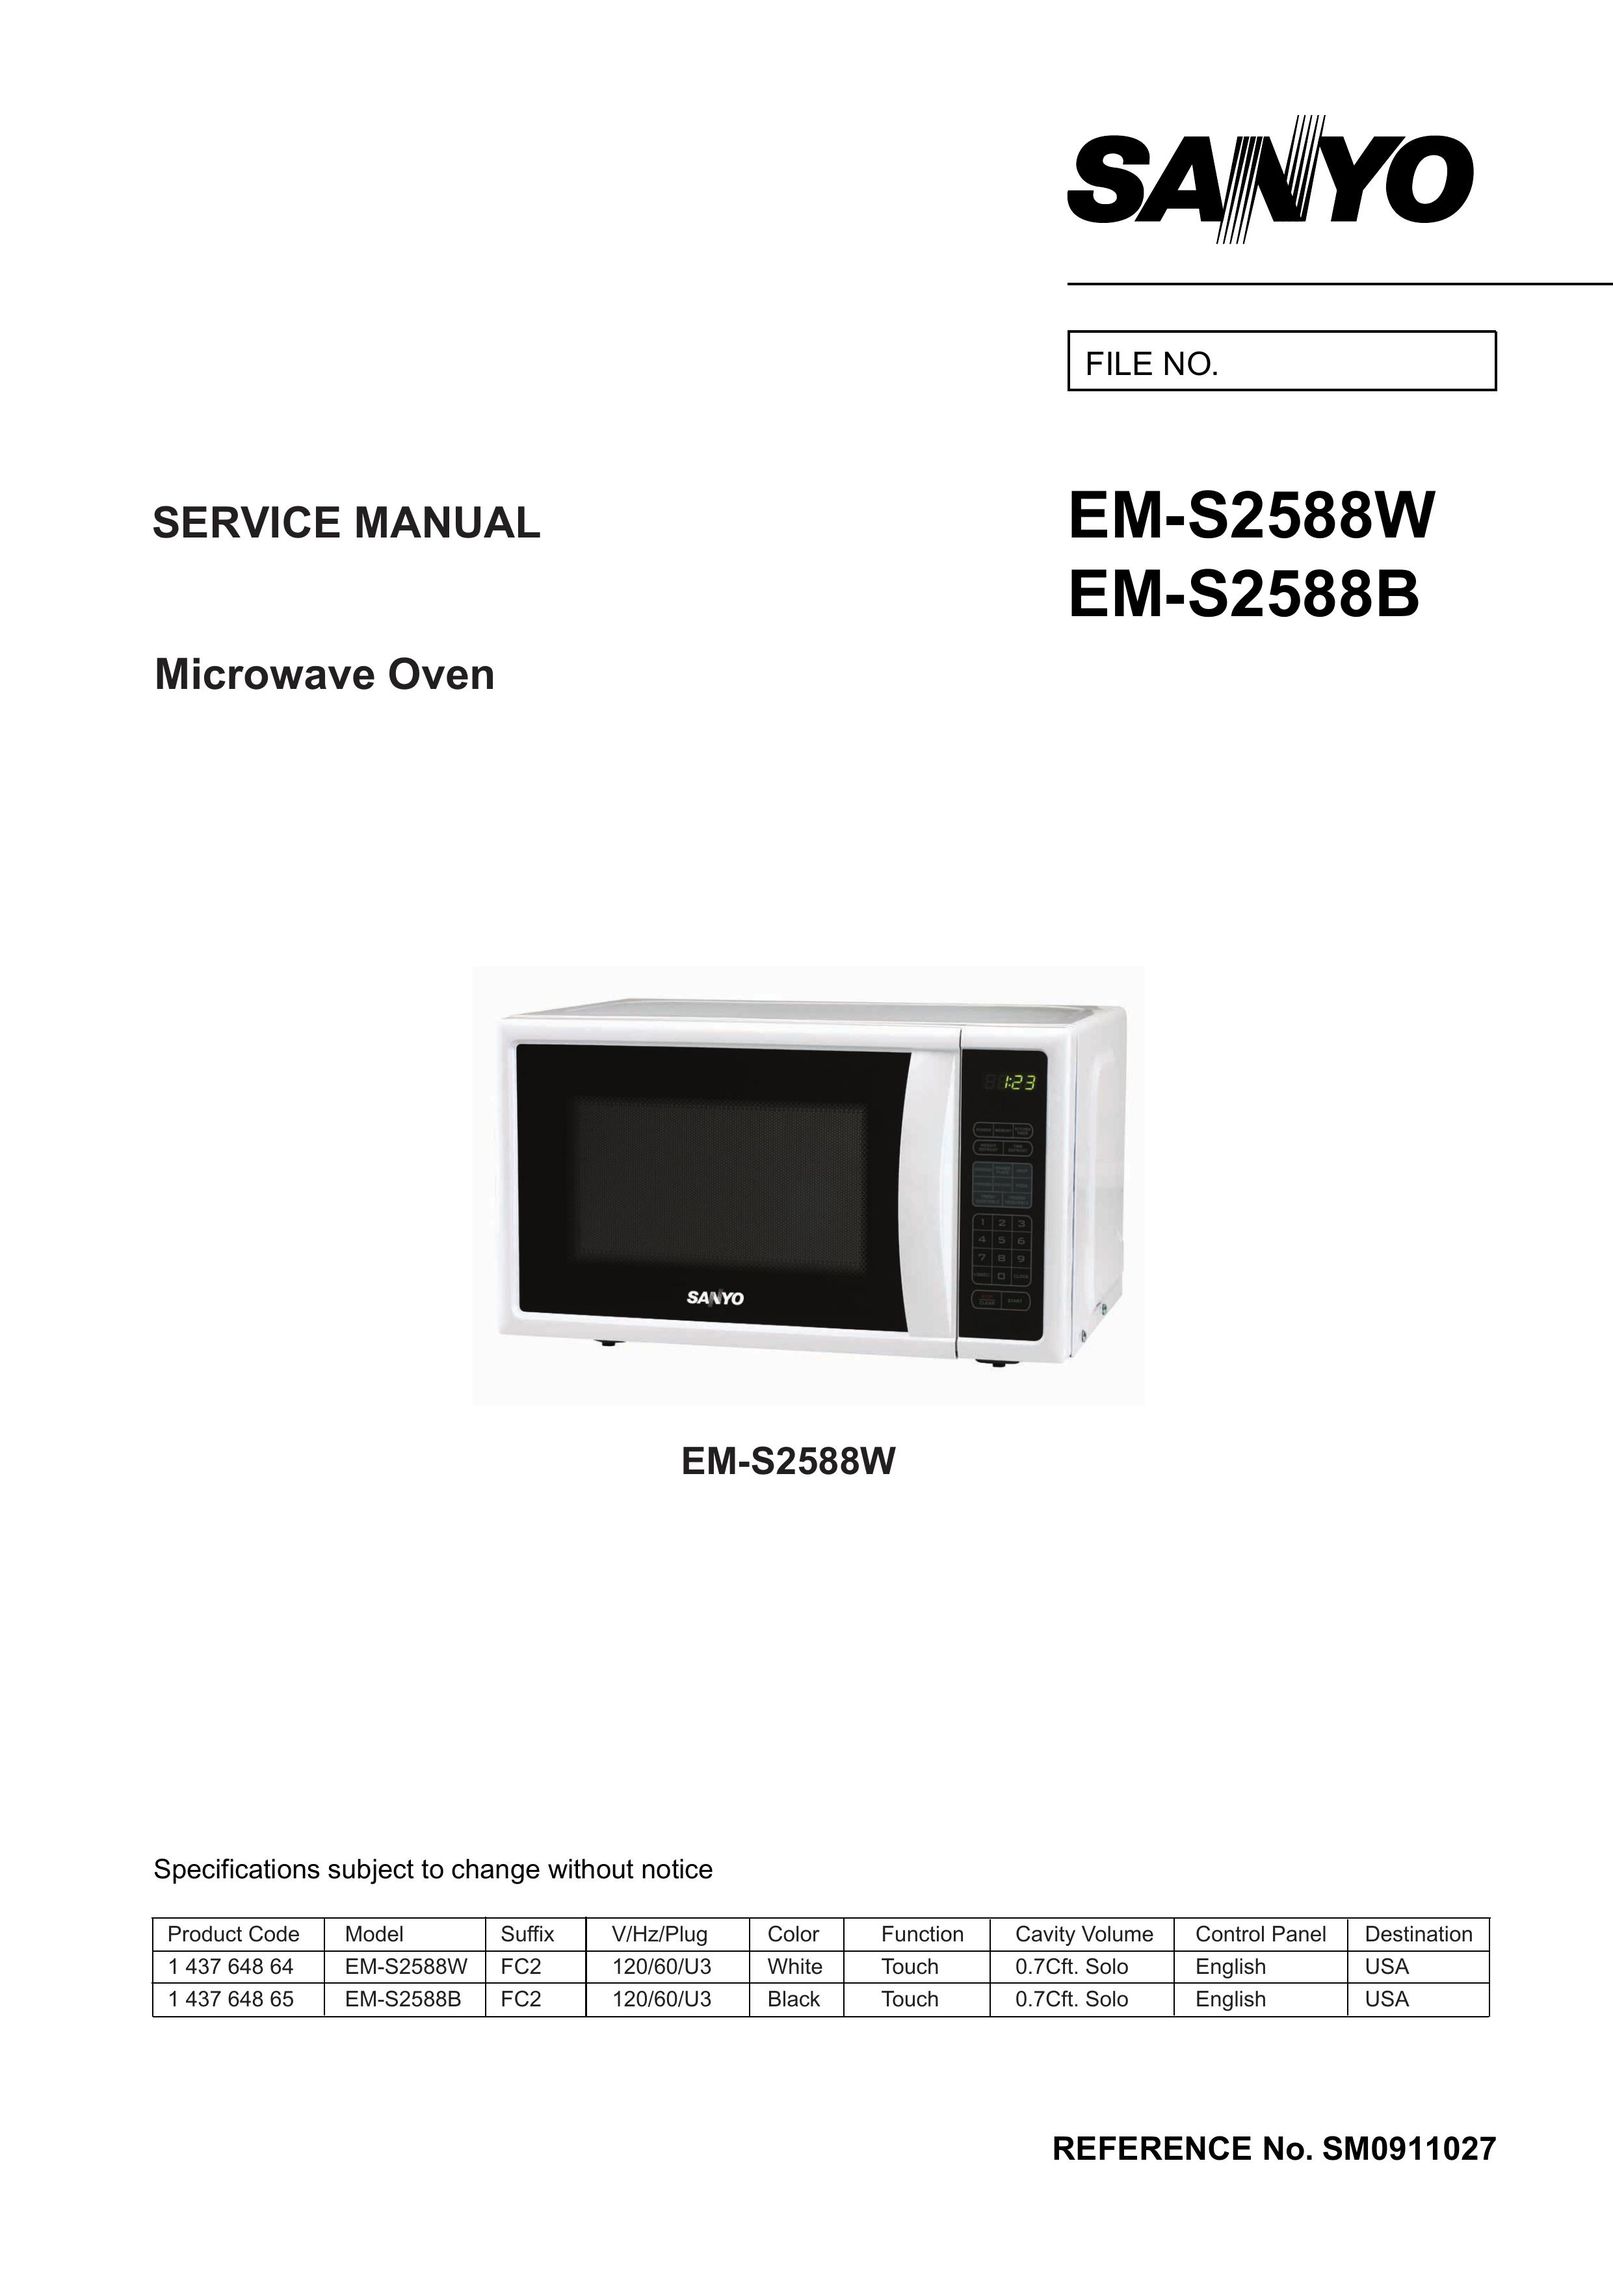 Sanyo EM-S2588B Microwave Oven User Manual